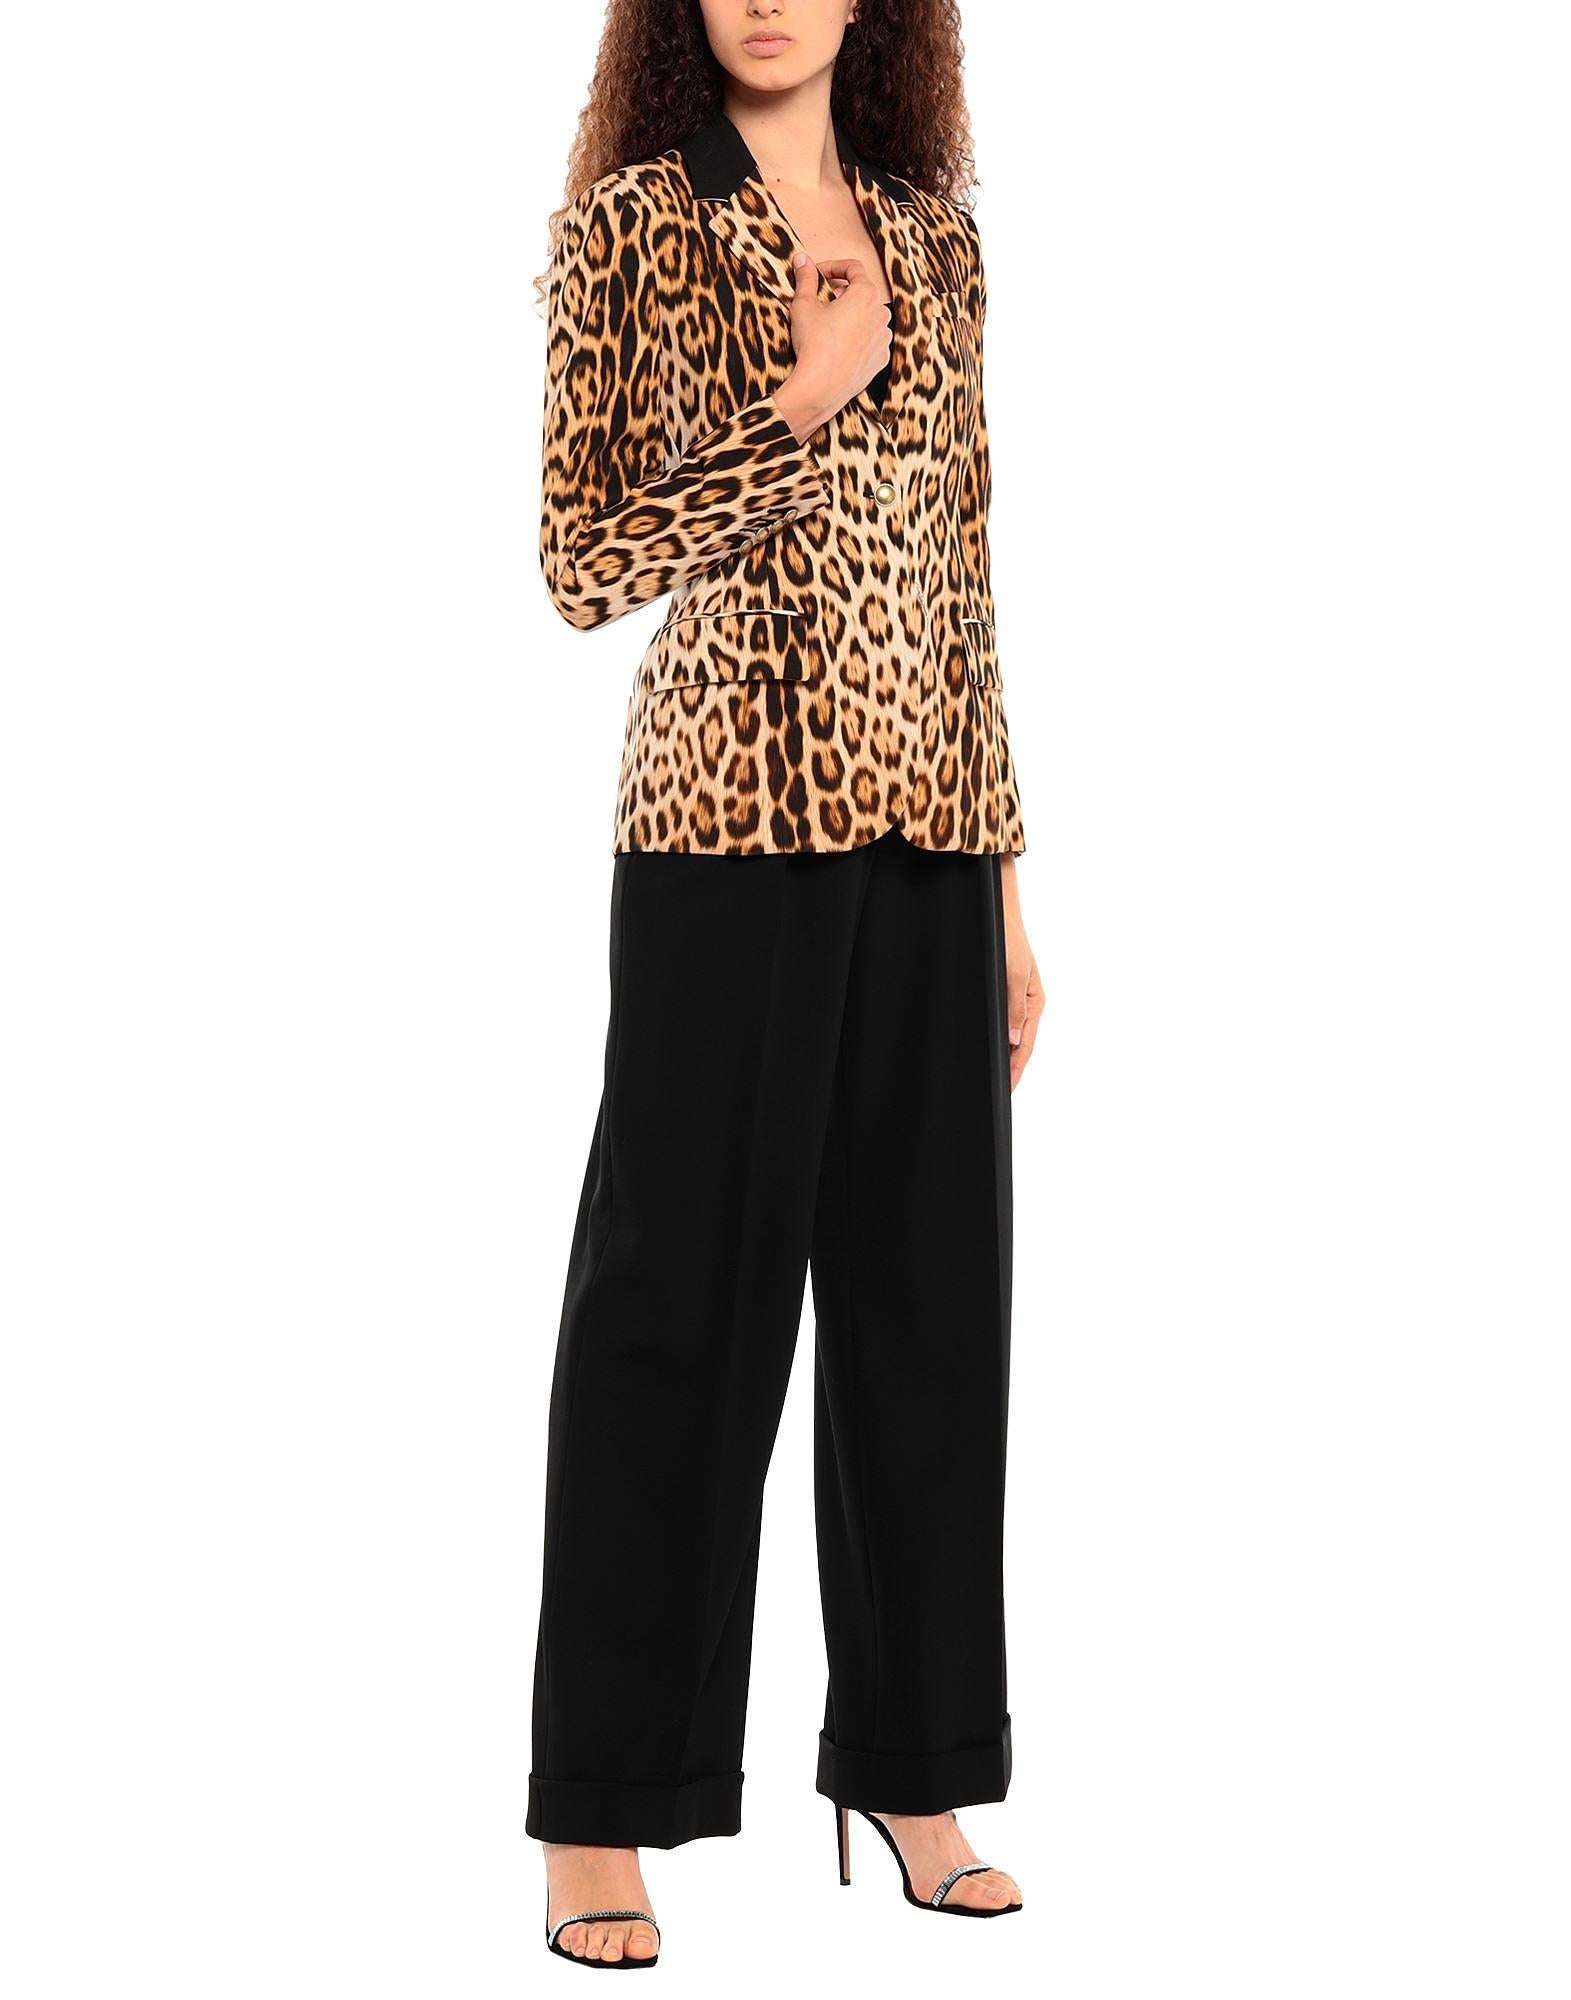 Roberto Cavalli Leopard Print Pant Suit Italian 40 For Sale 2